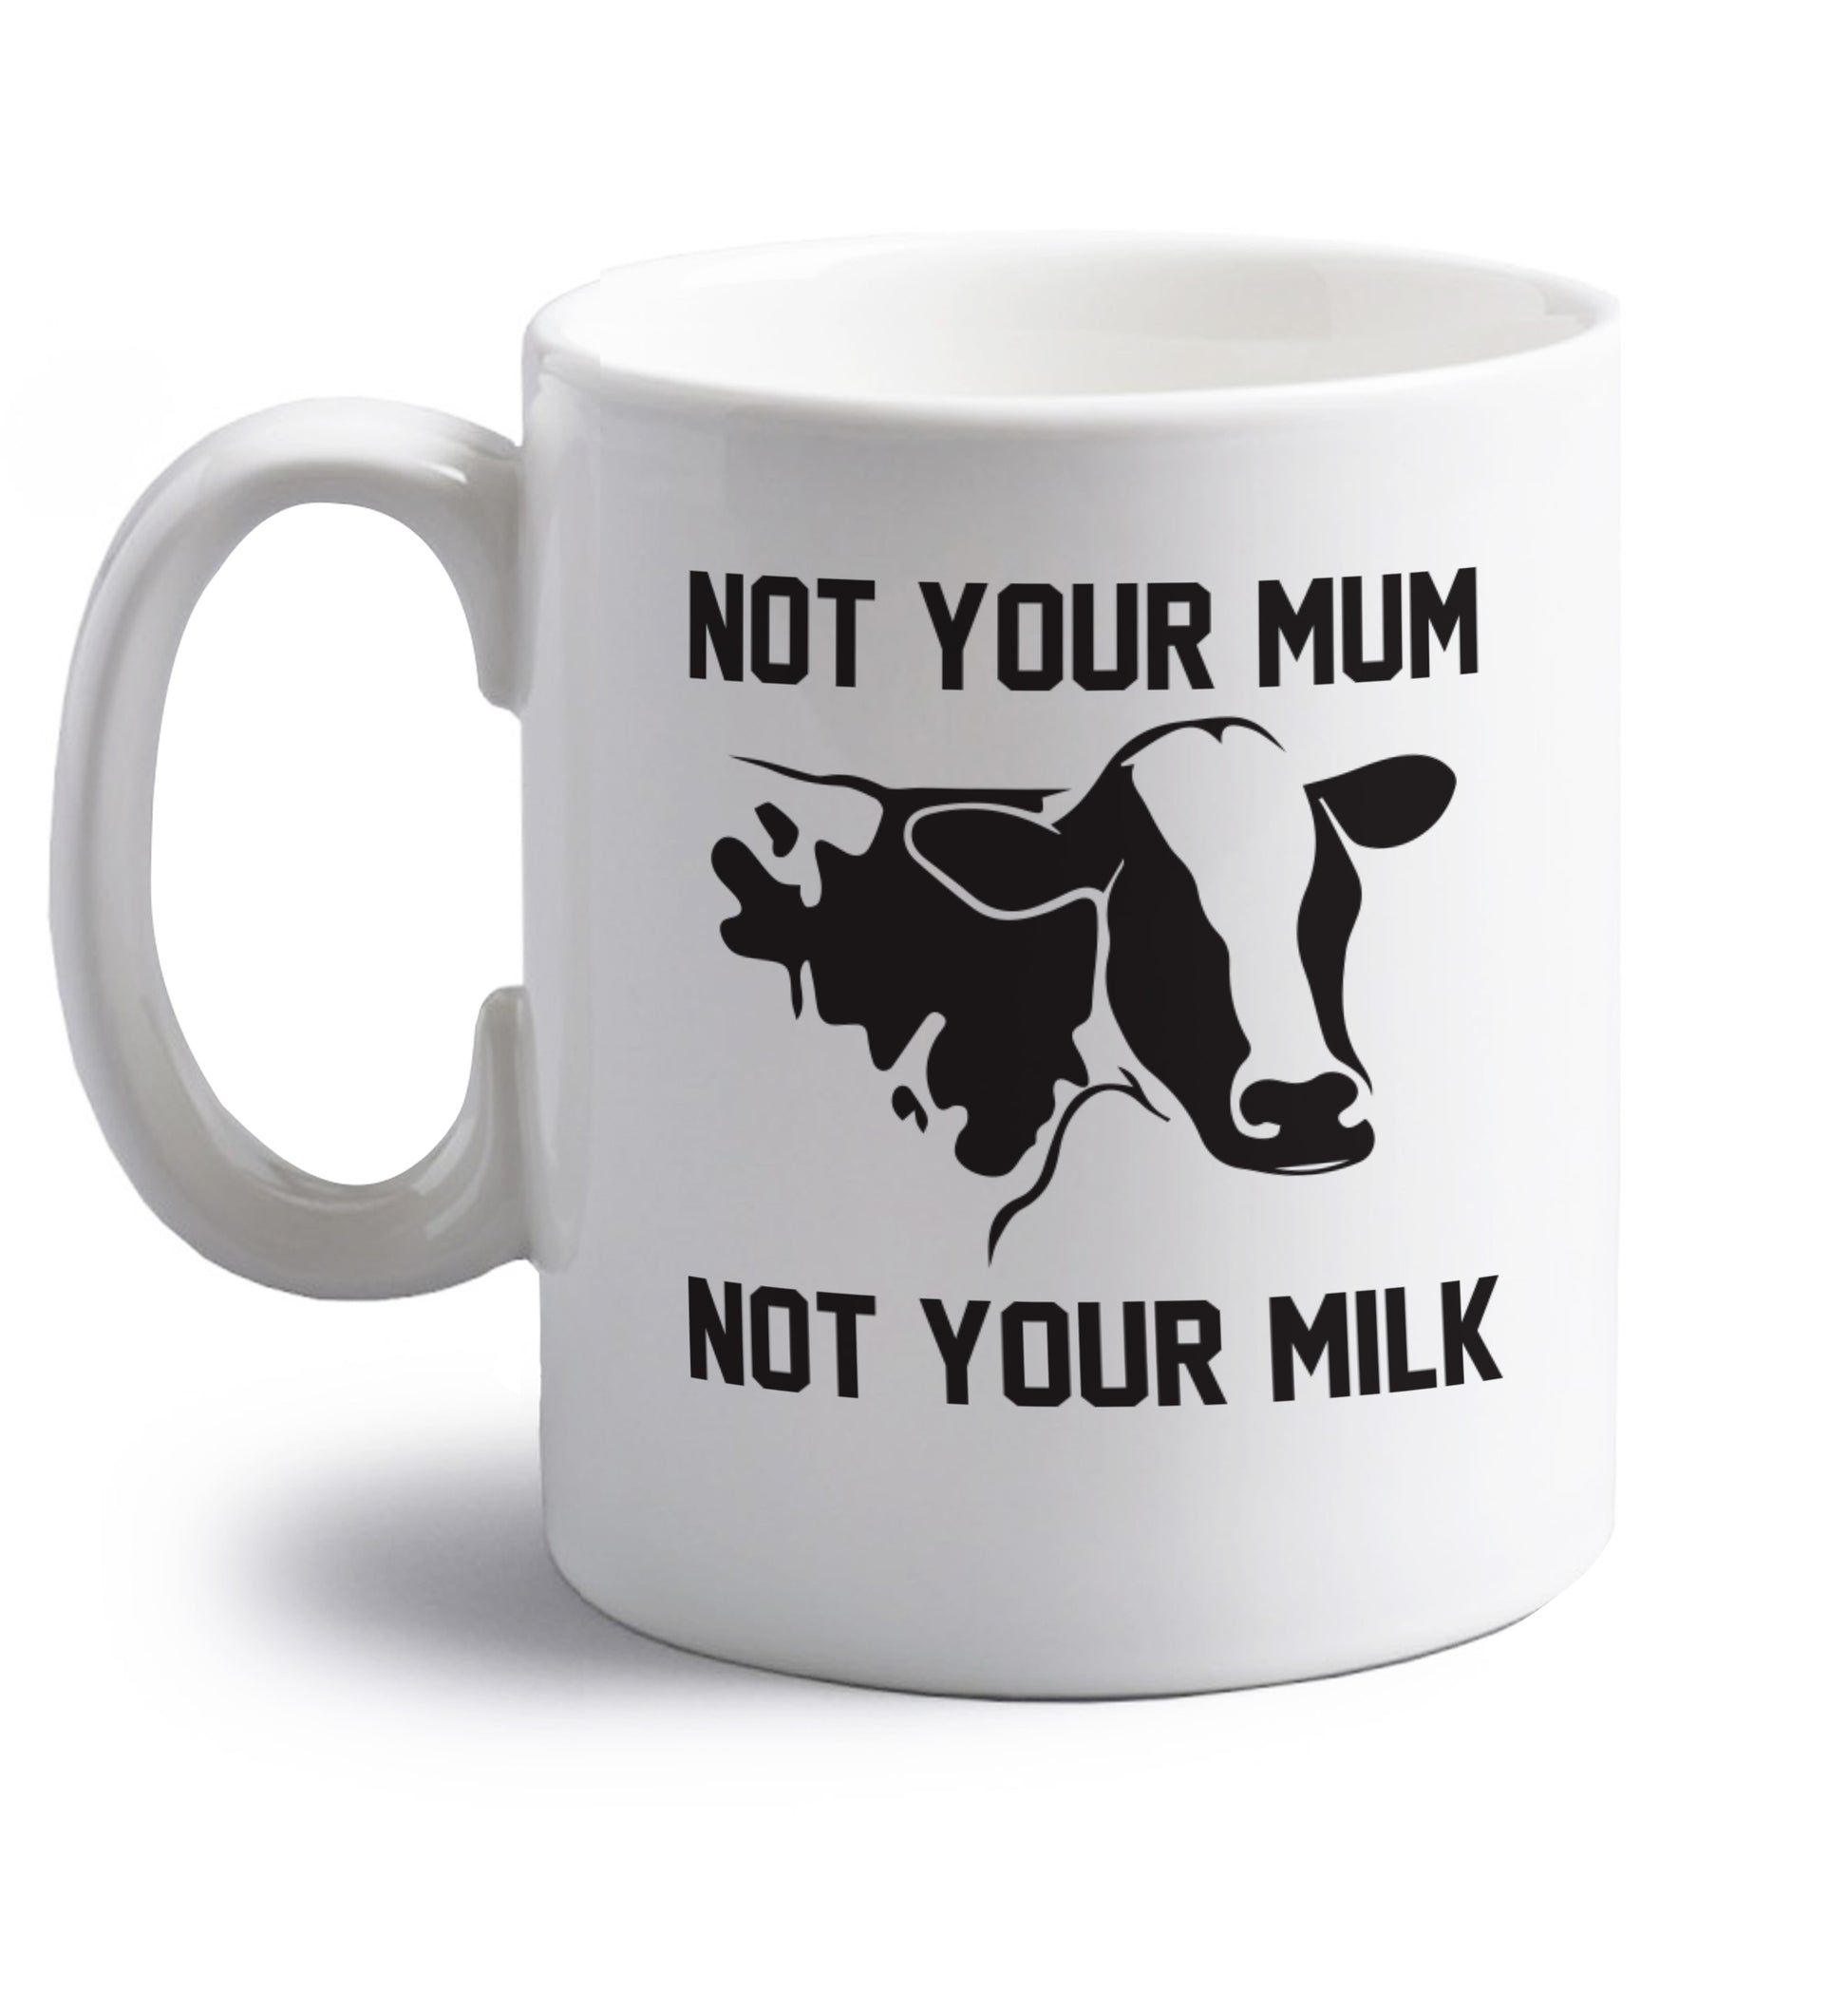 Not your mum not your milk right handed white ceramic mug 